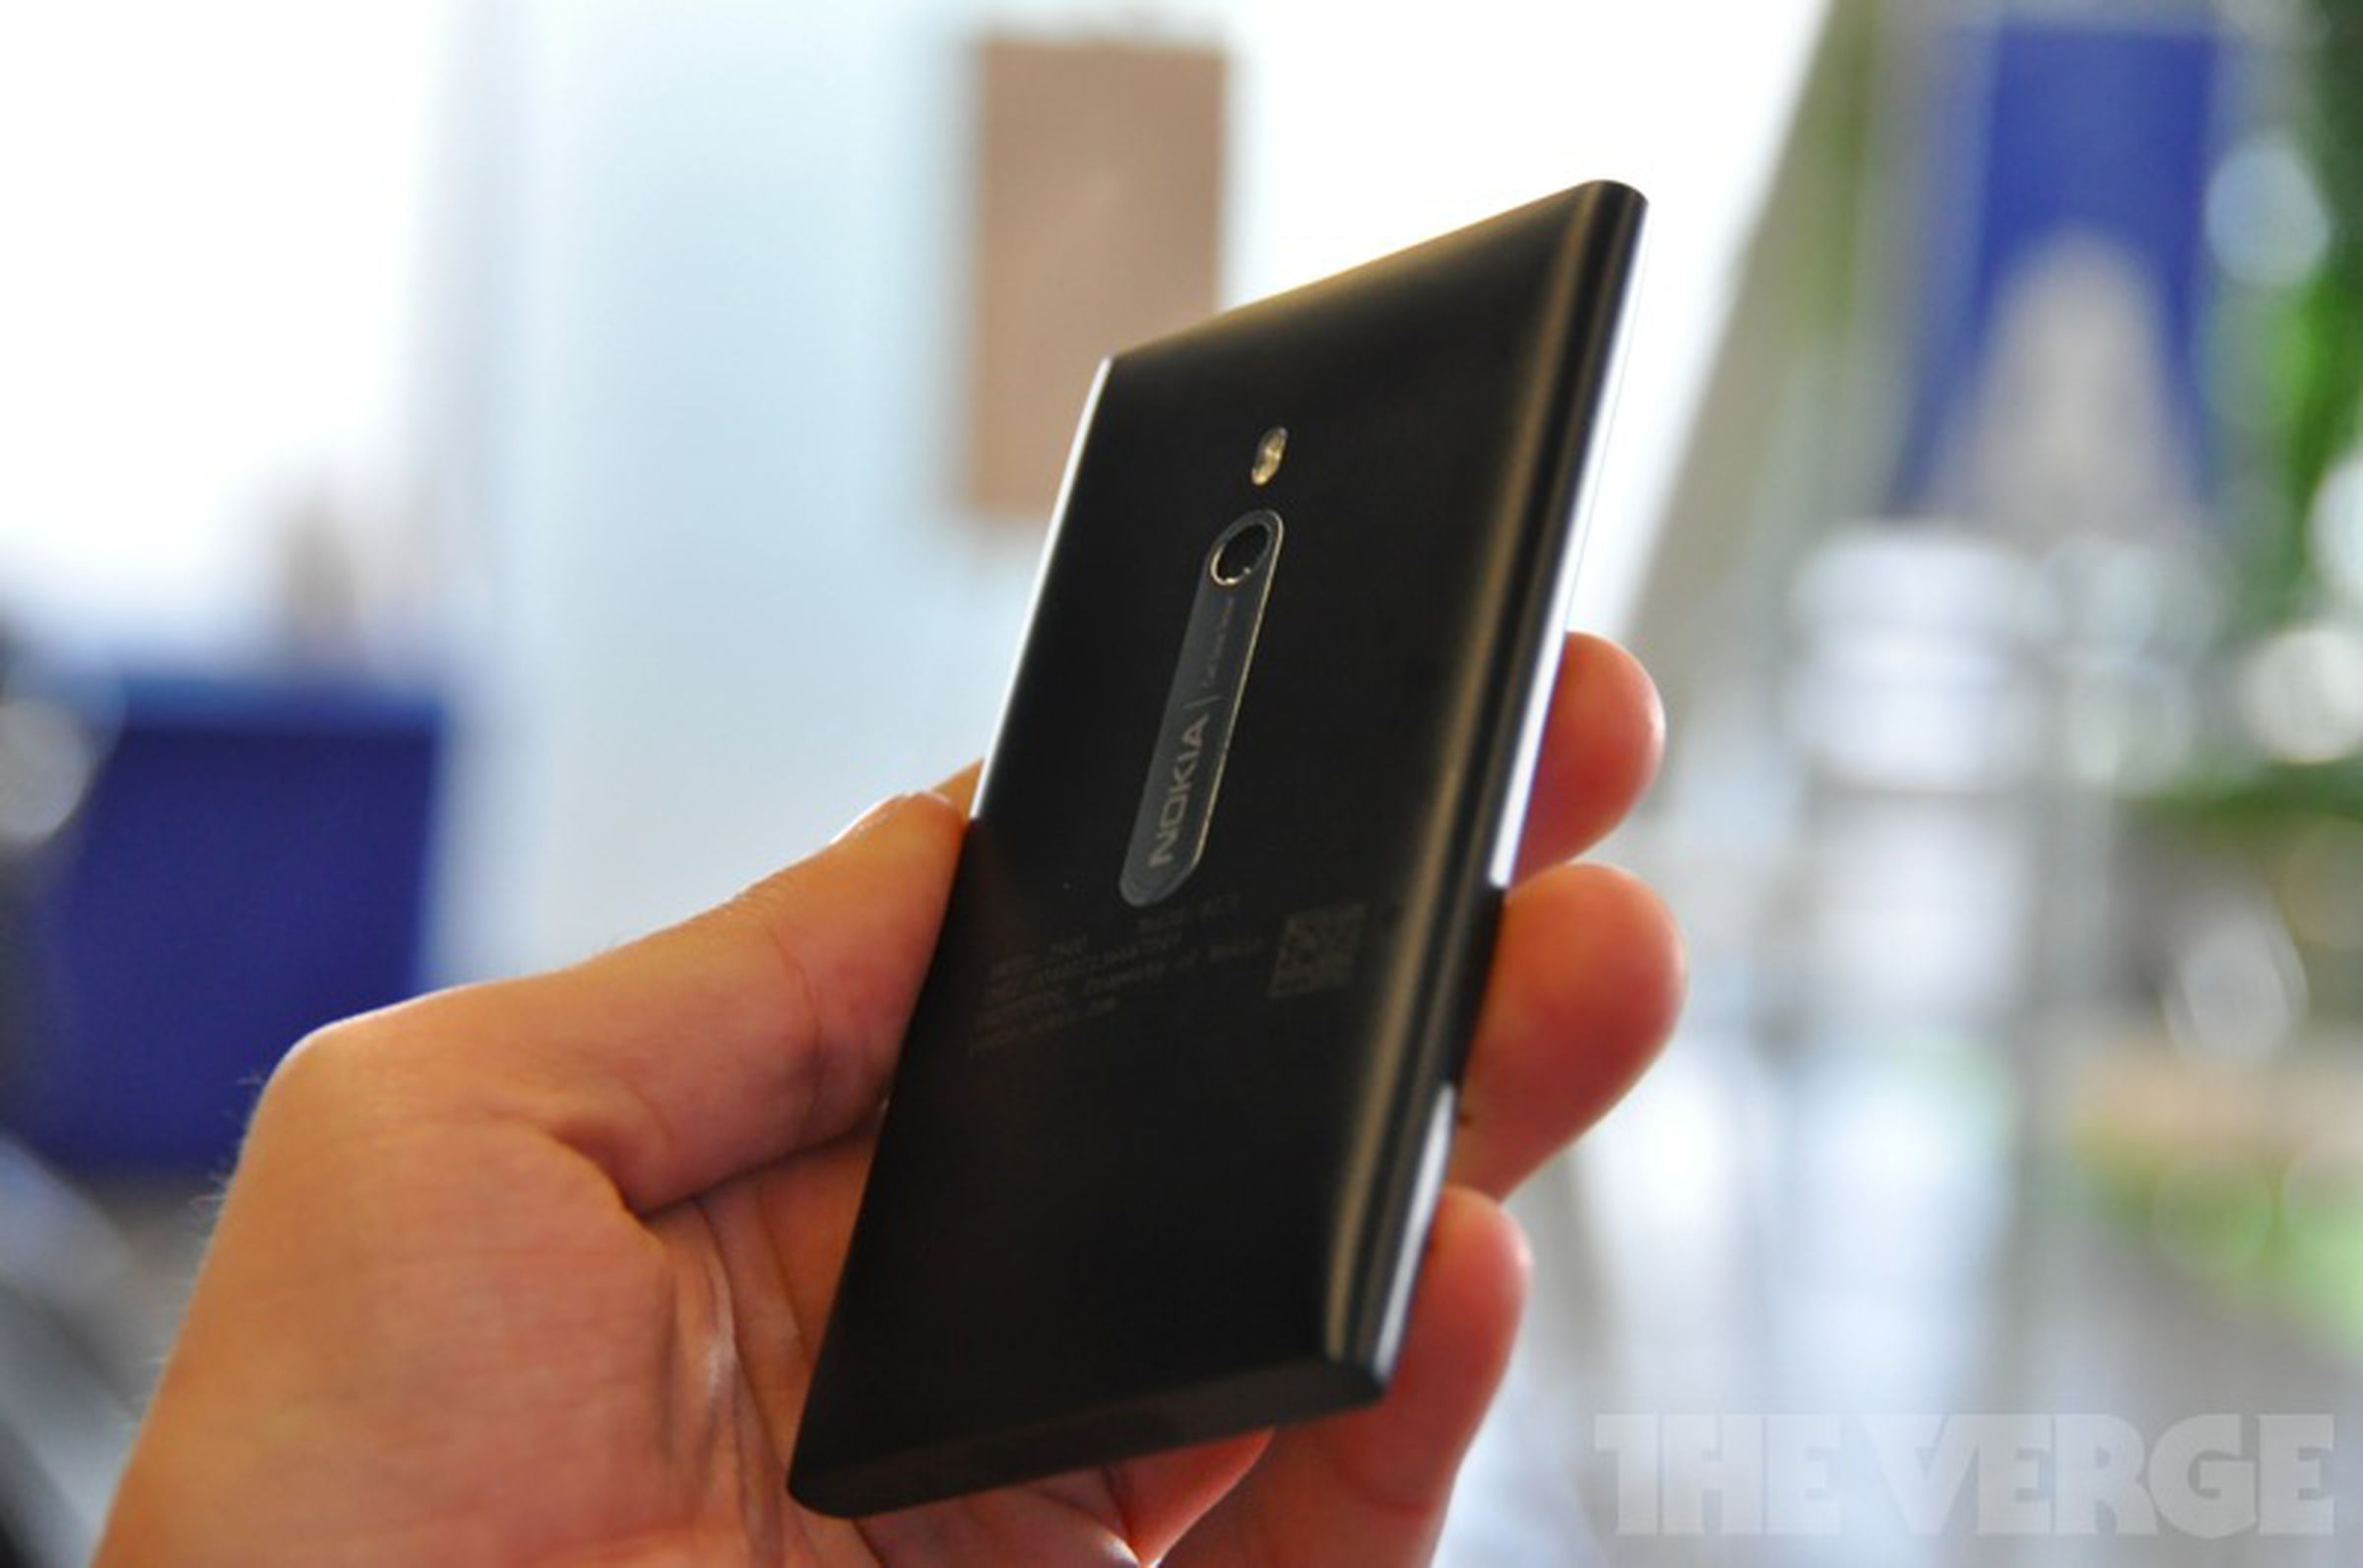     Nokia Lumia 800 Windows Phone hands on photos  